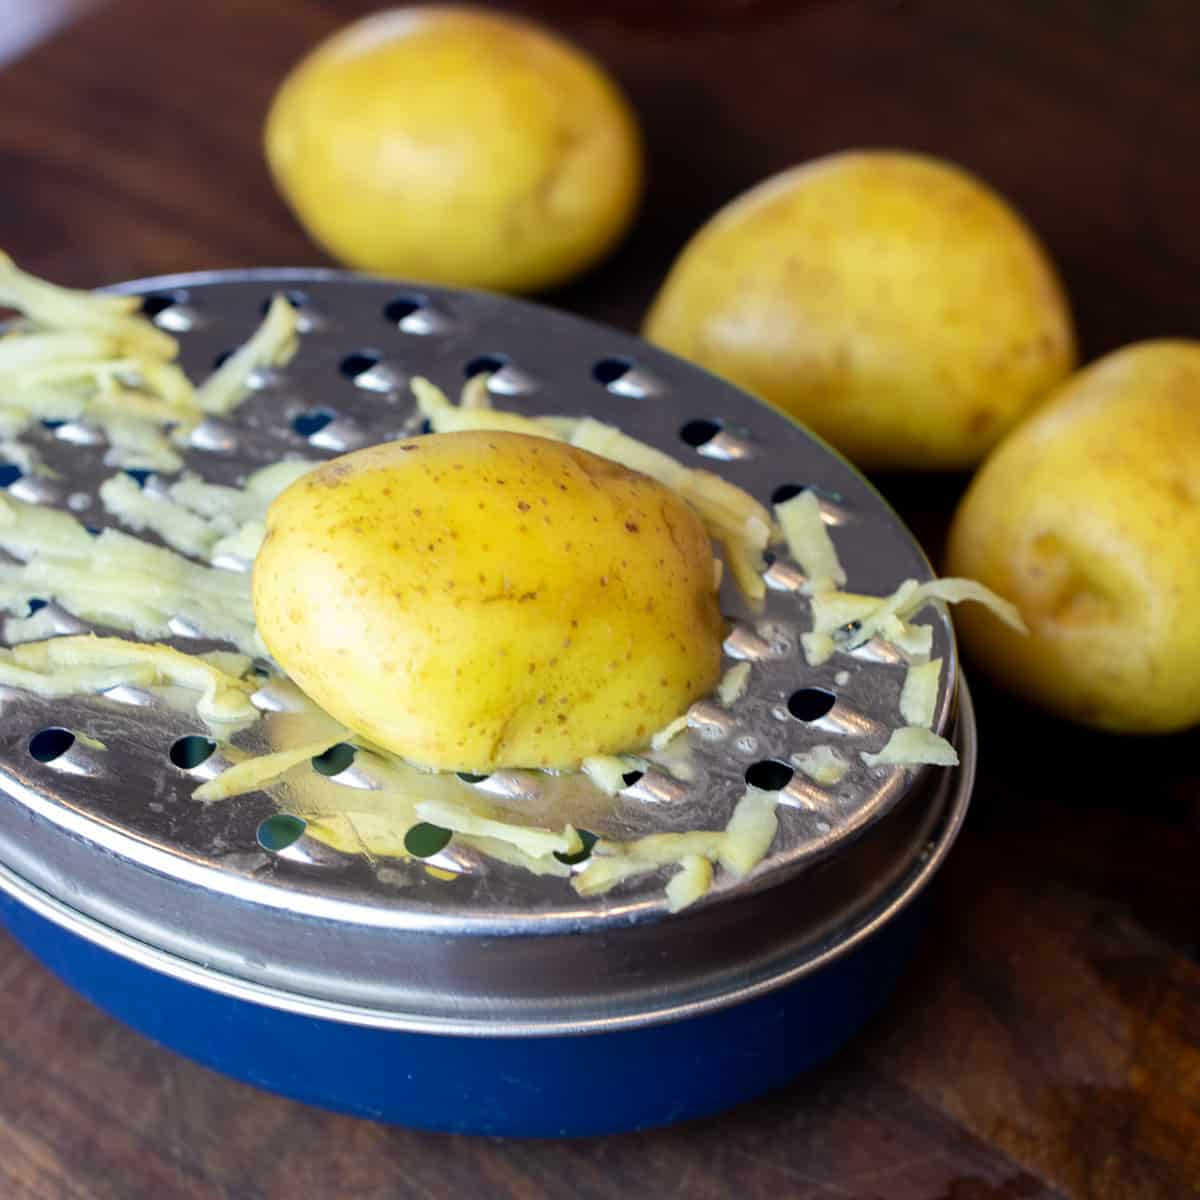 Yellow Yukon gold potatoes being grated.